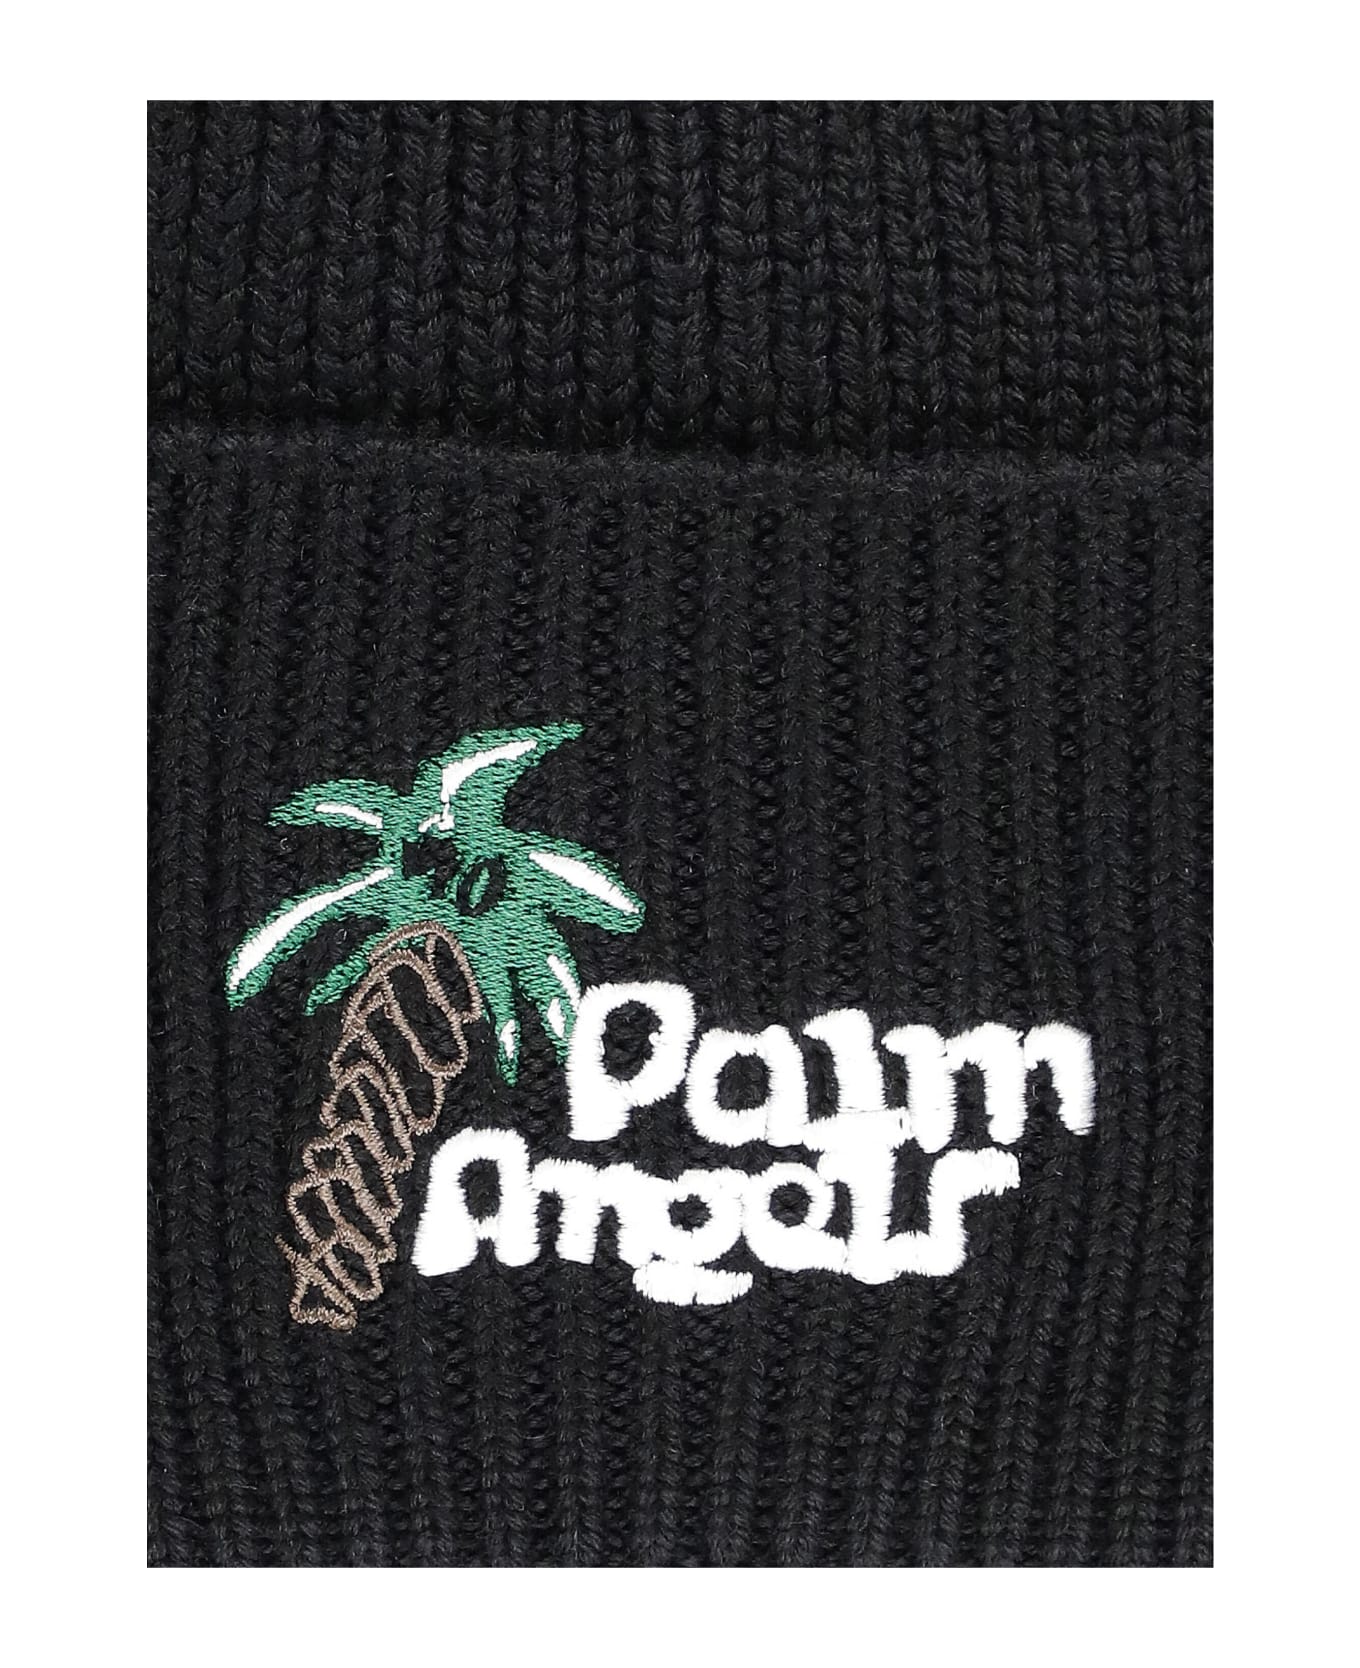 Palm Angels Beanie With Logo - Black 帽子